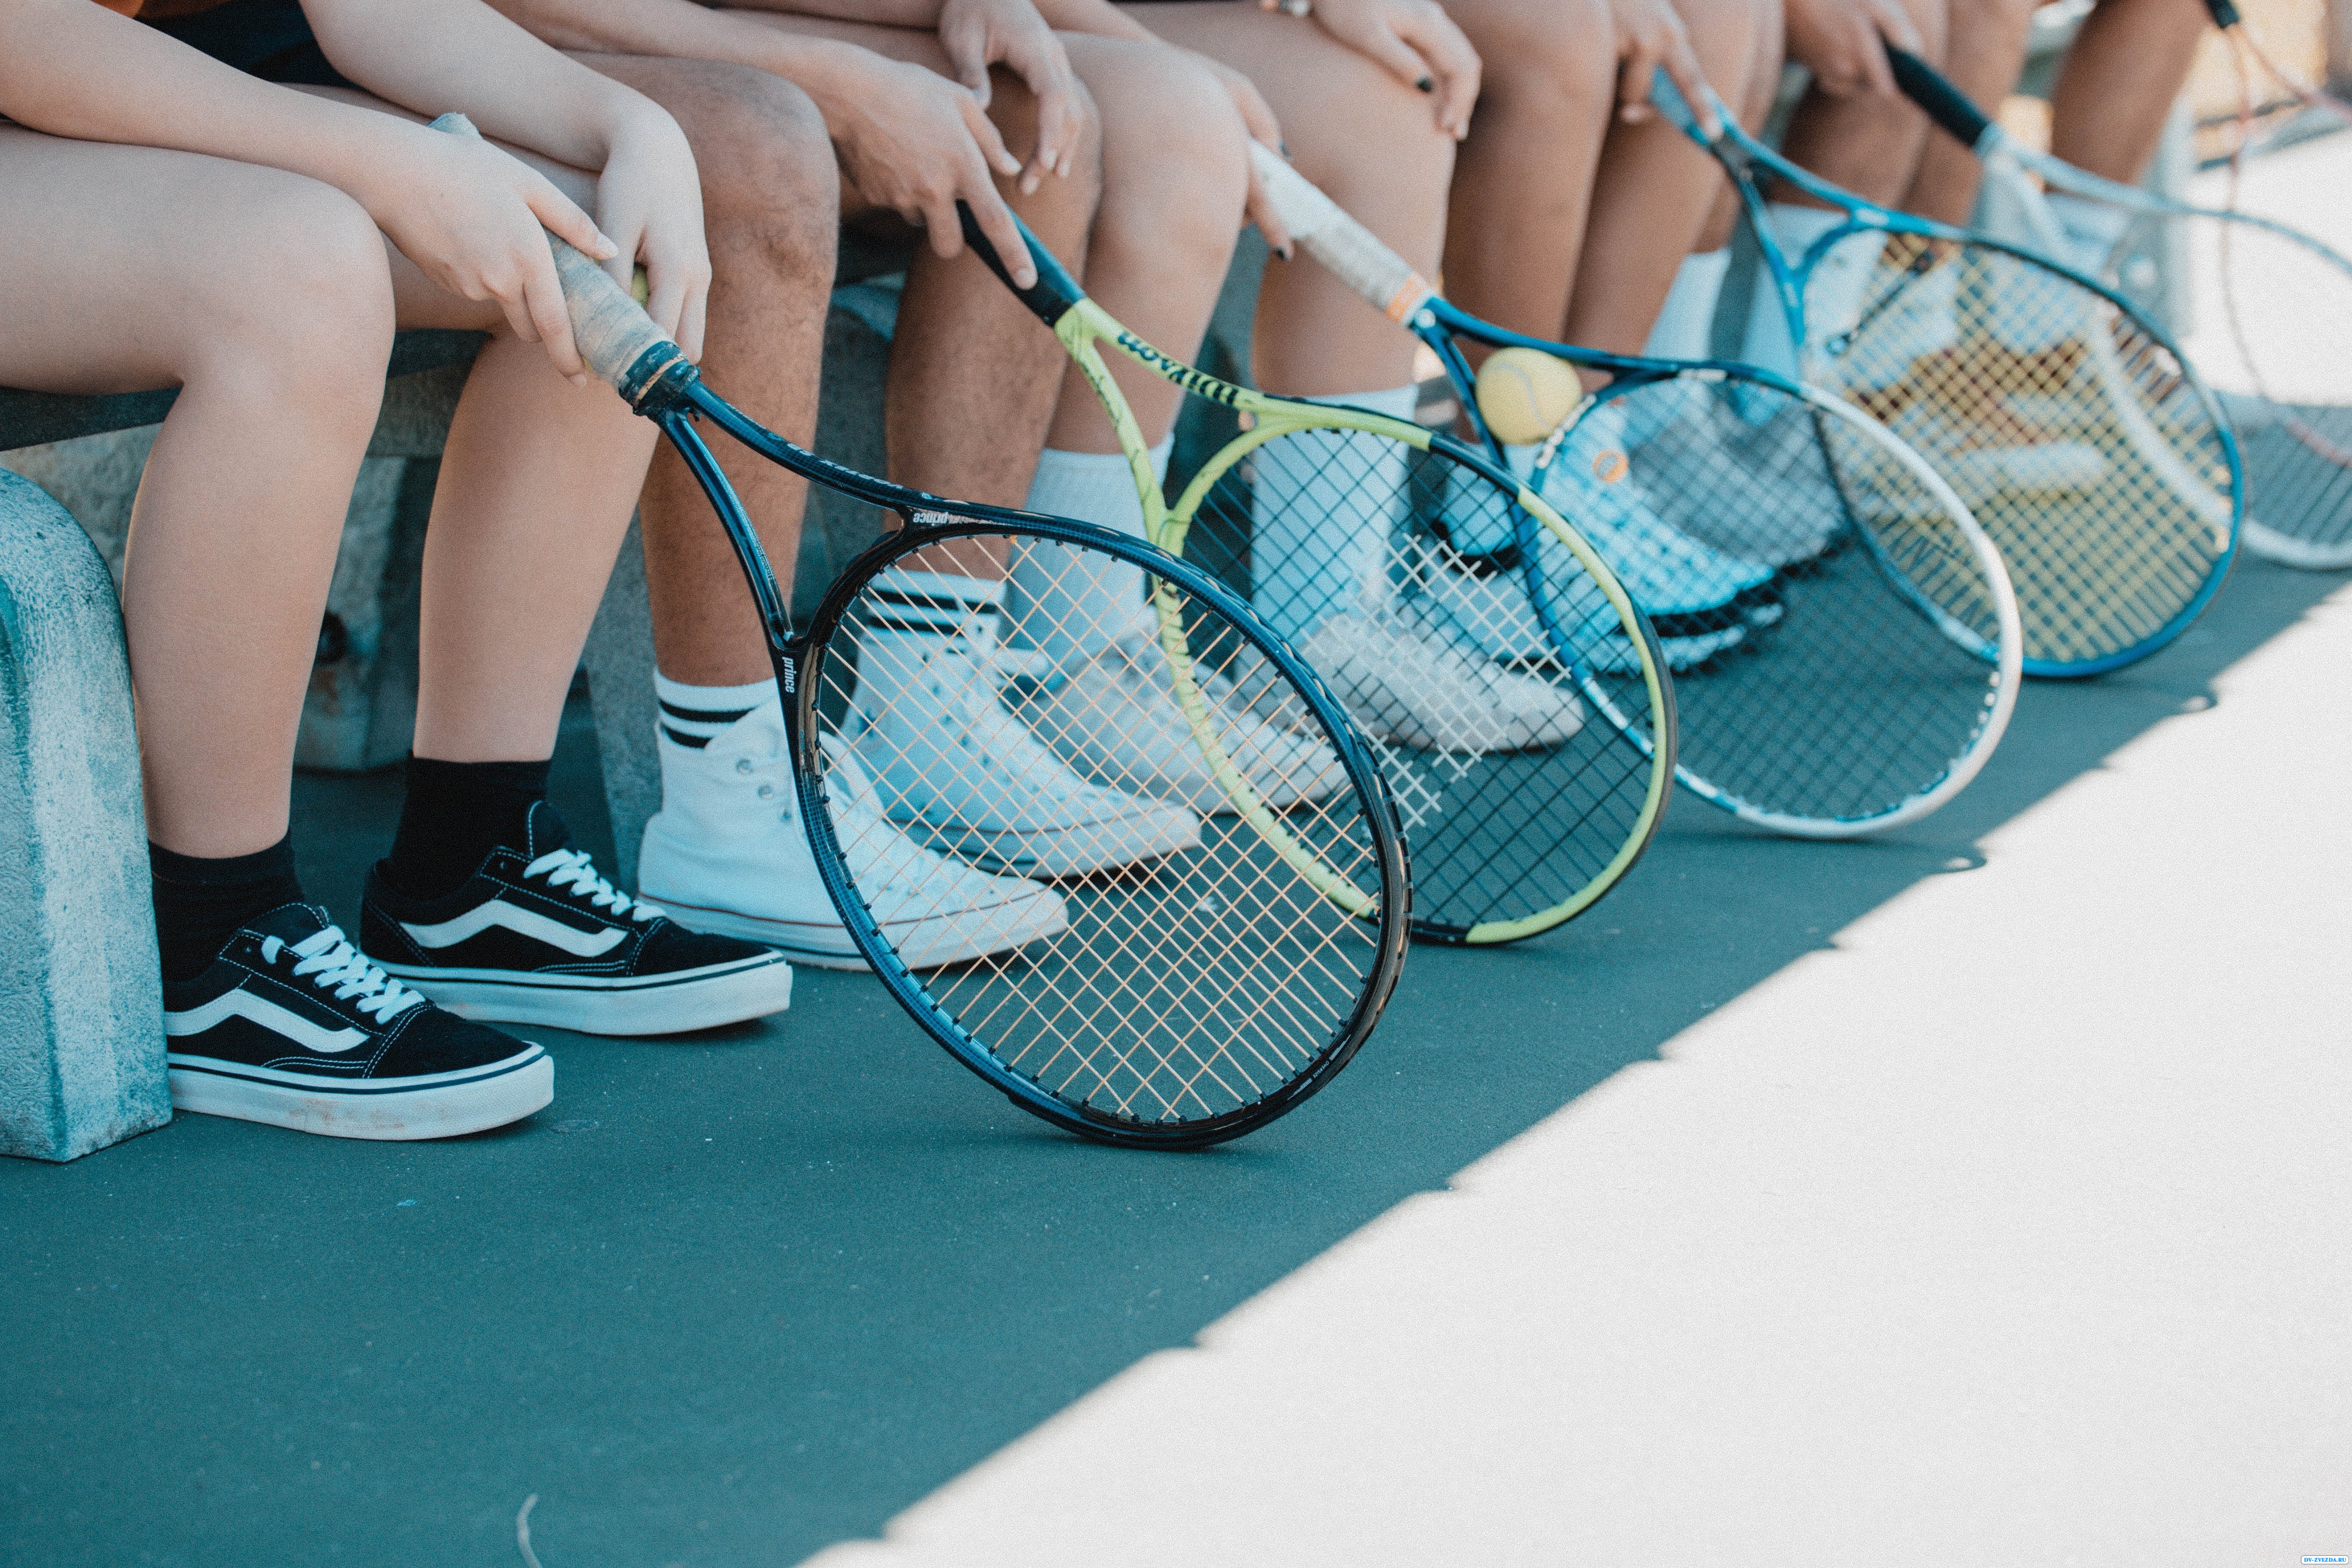 История возникновения тенниса как все начиналось